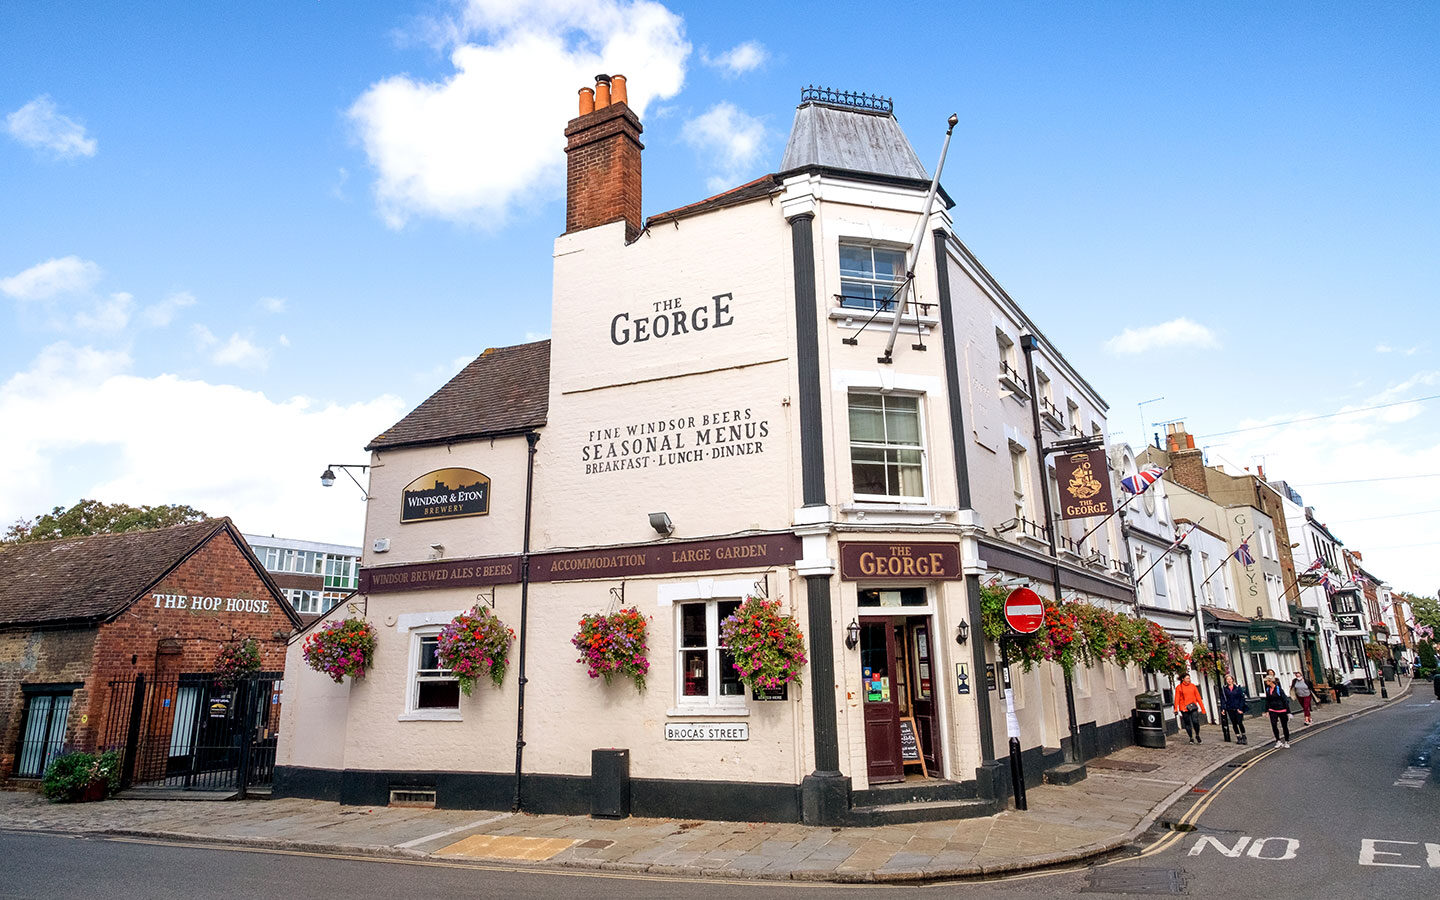 The Windsor and Eton Brewery's George Inn